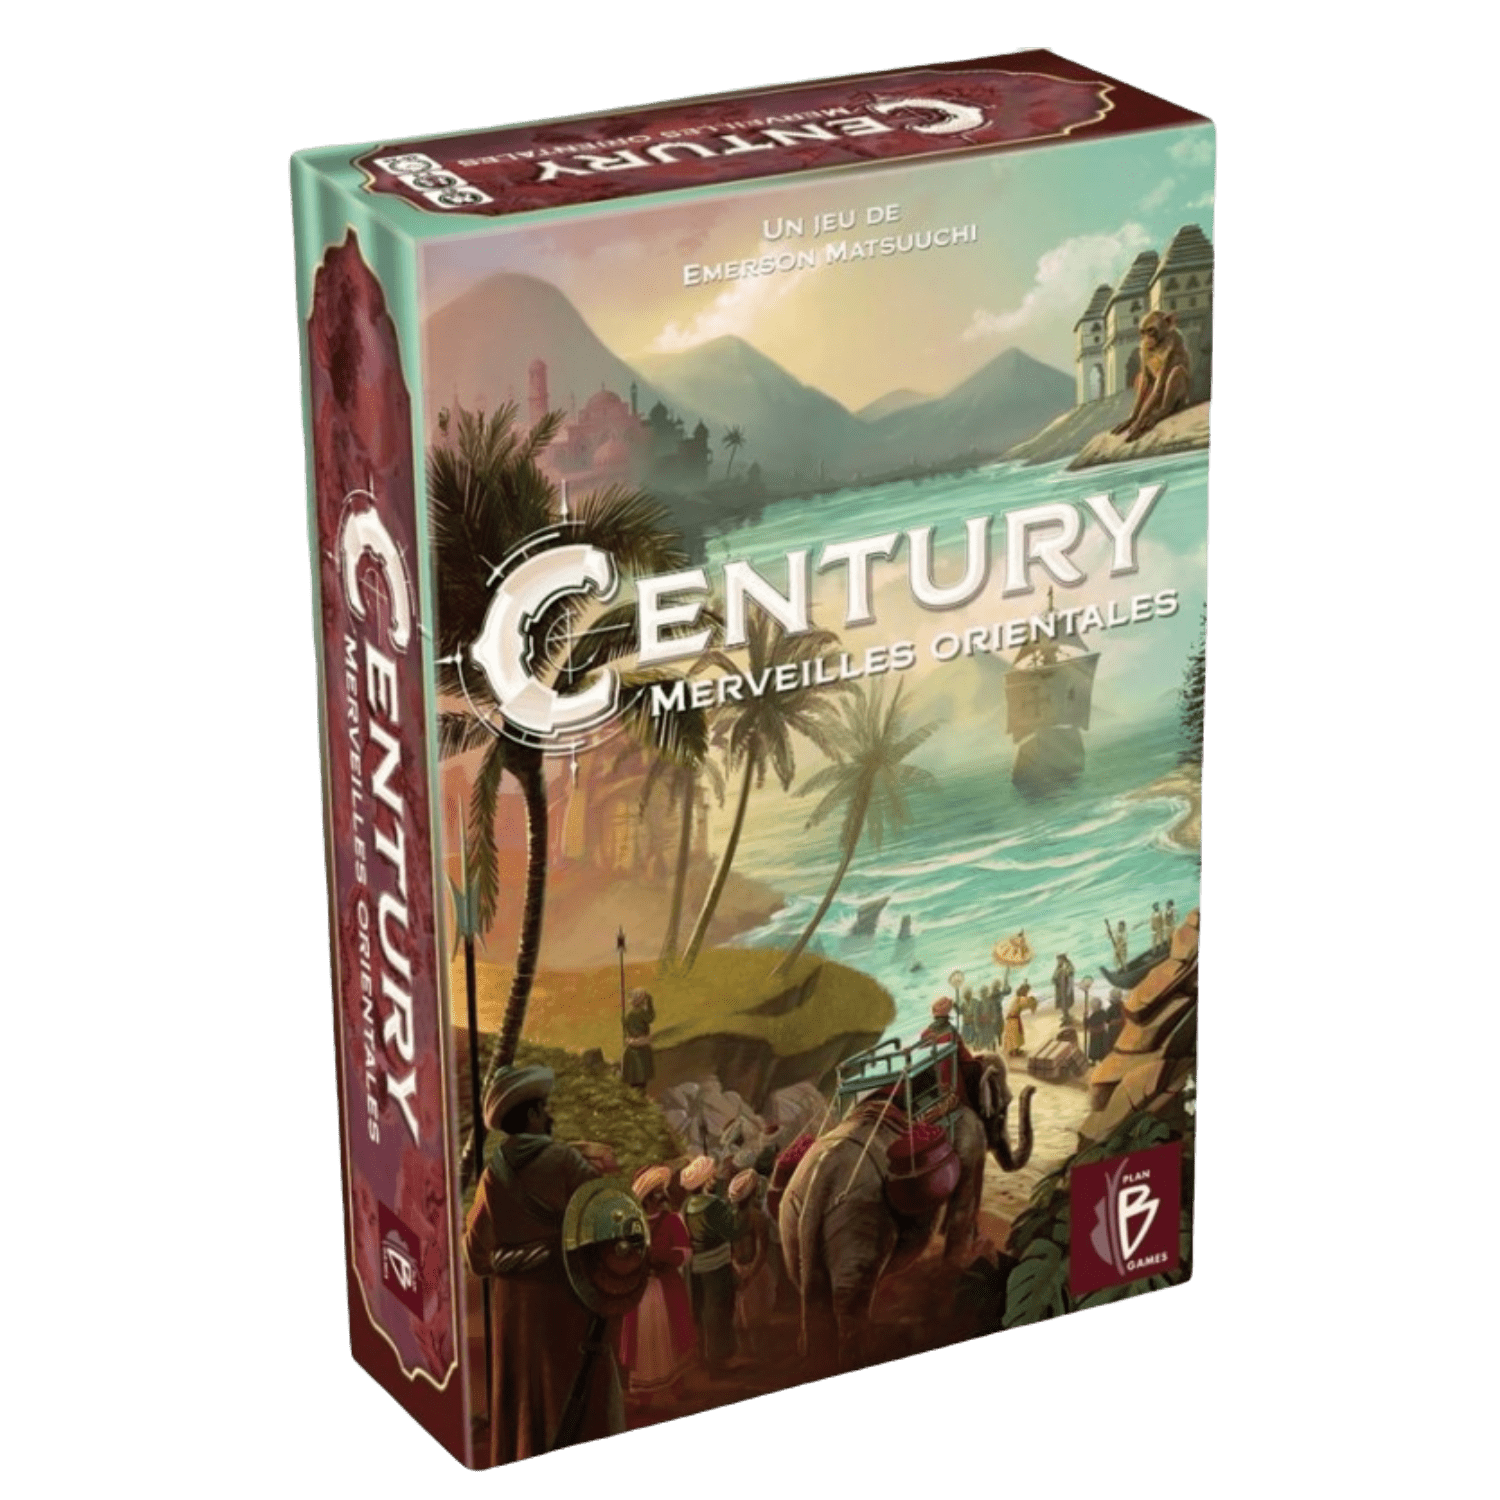 Century - Merveilles orientales